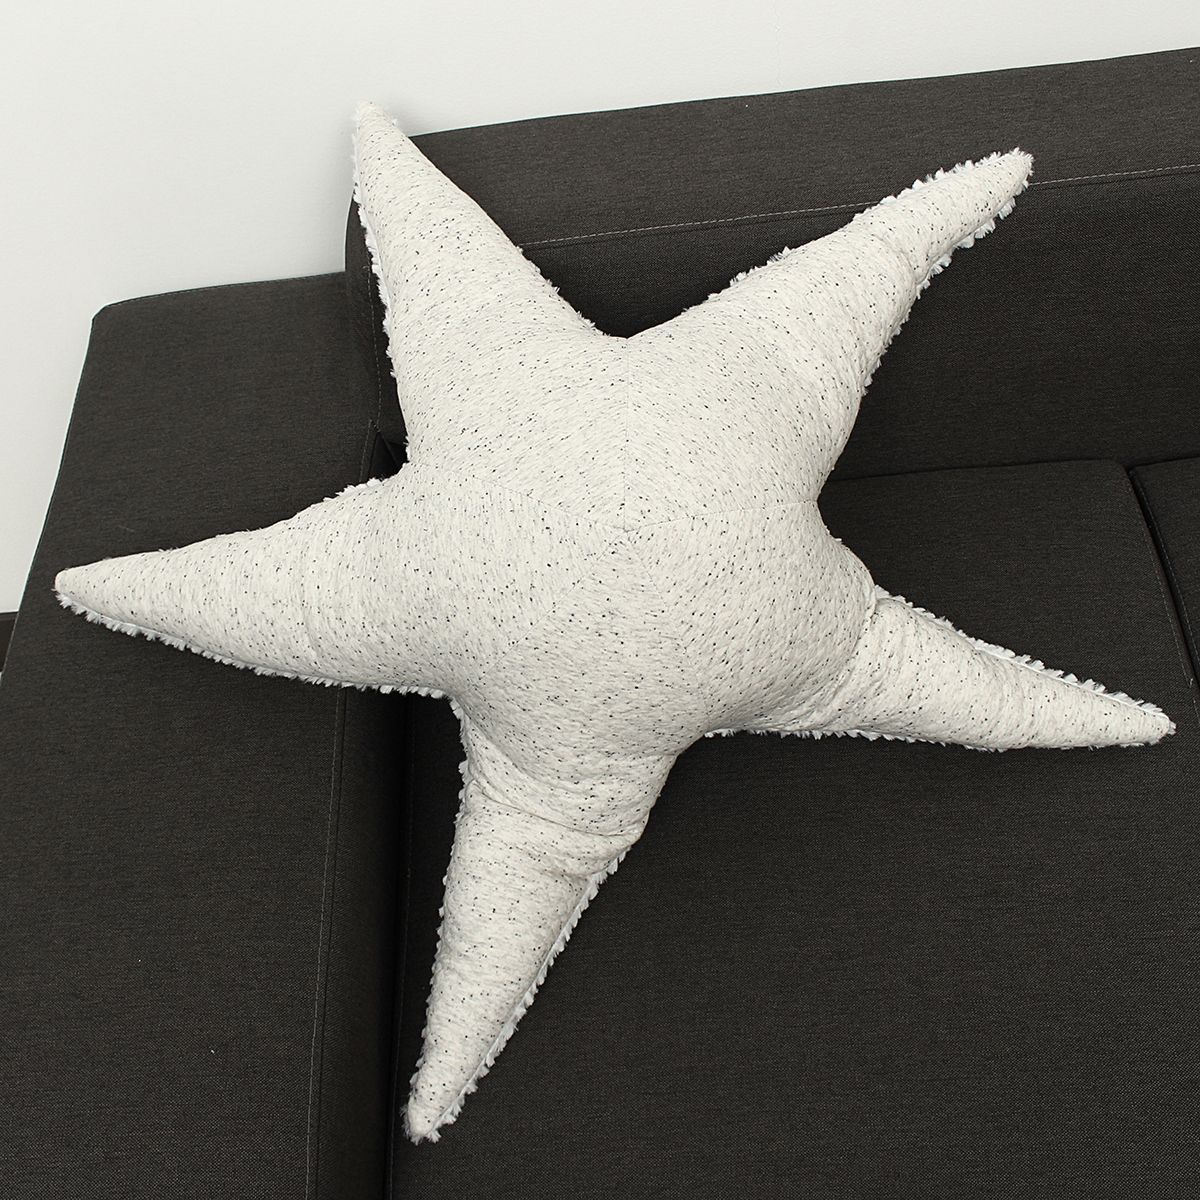 Starfish-Plush-Toy-Doll-Baby-Kids-Child-Cute-Gift-Pillow-Cushion-Sofa-Home-Decor-1557369